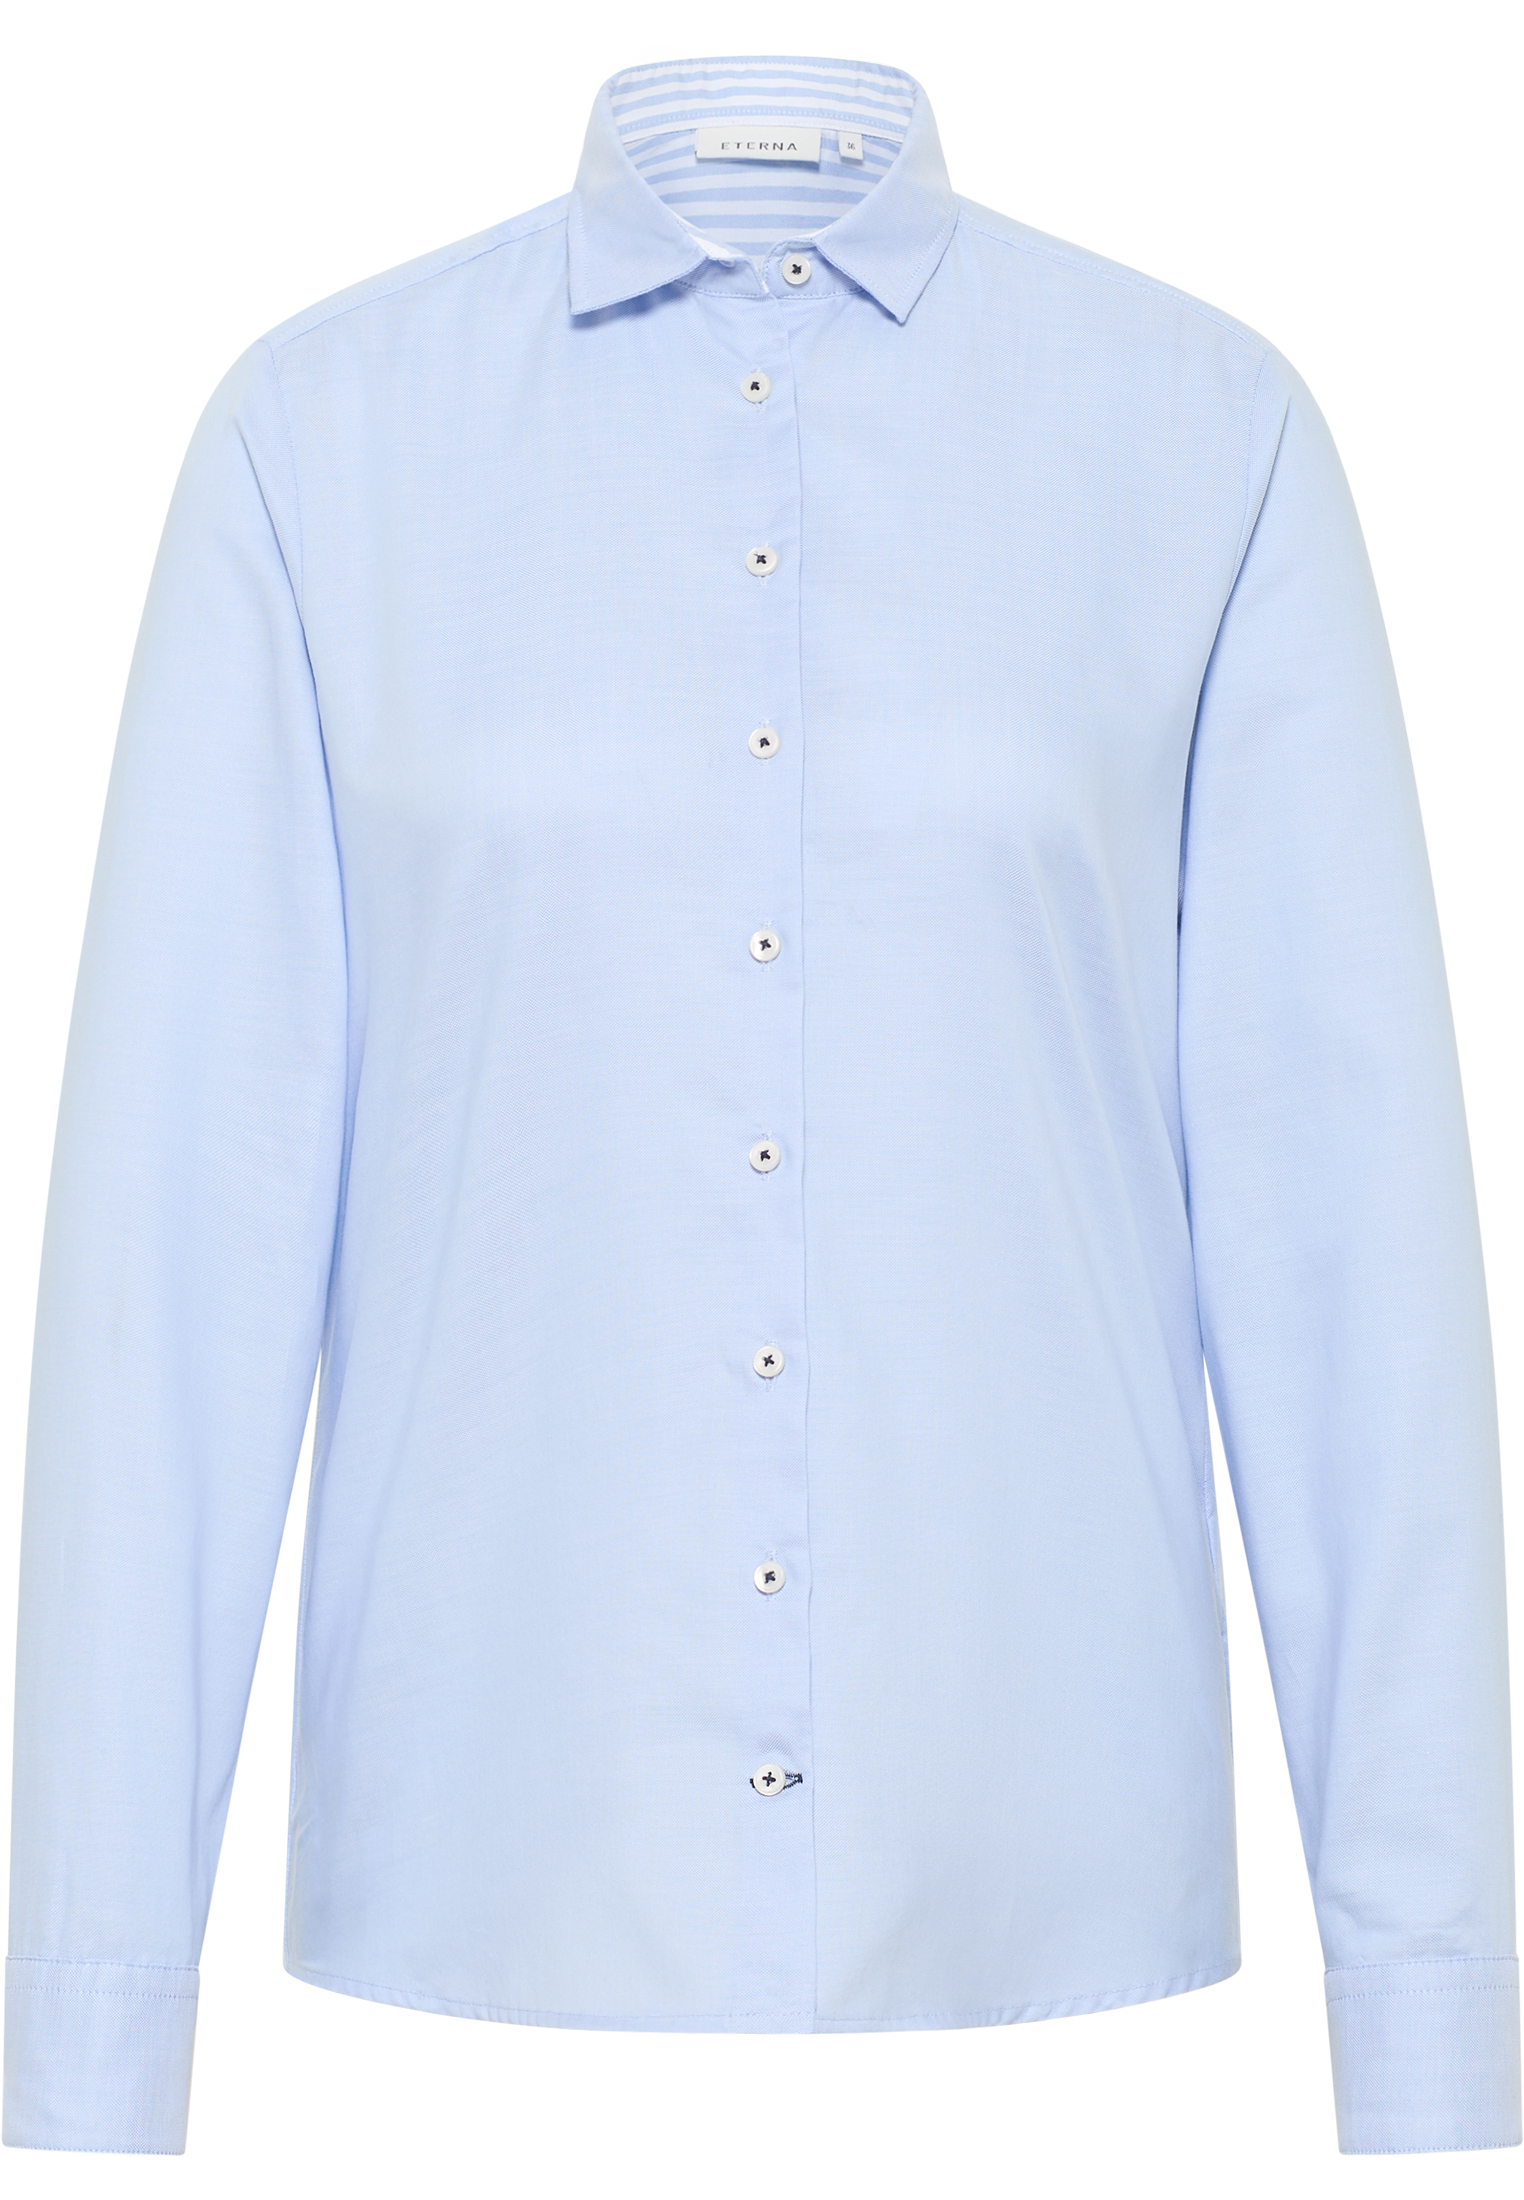 shirt-blouse in medium blue plain